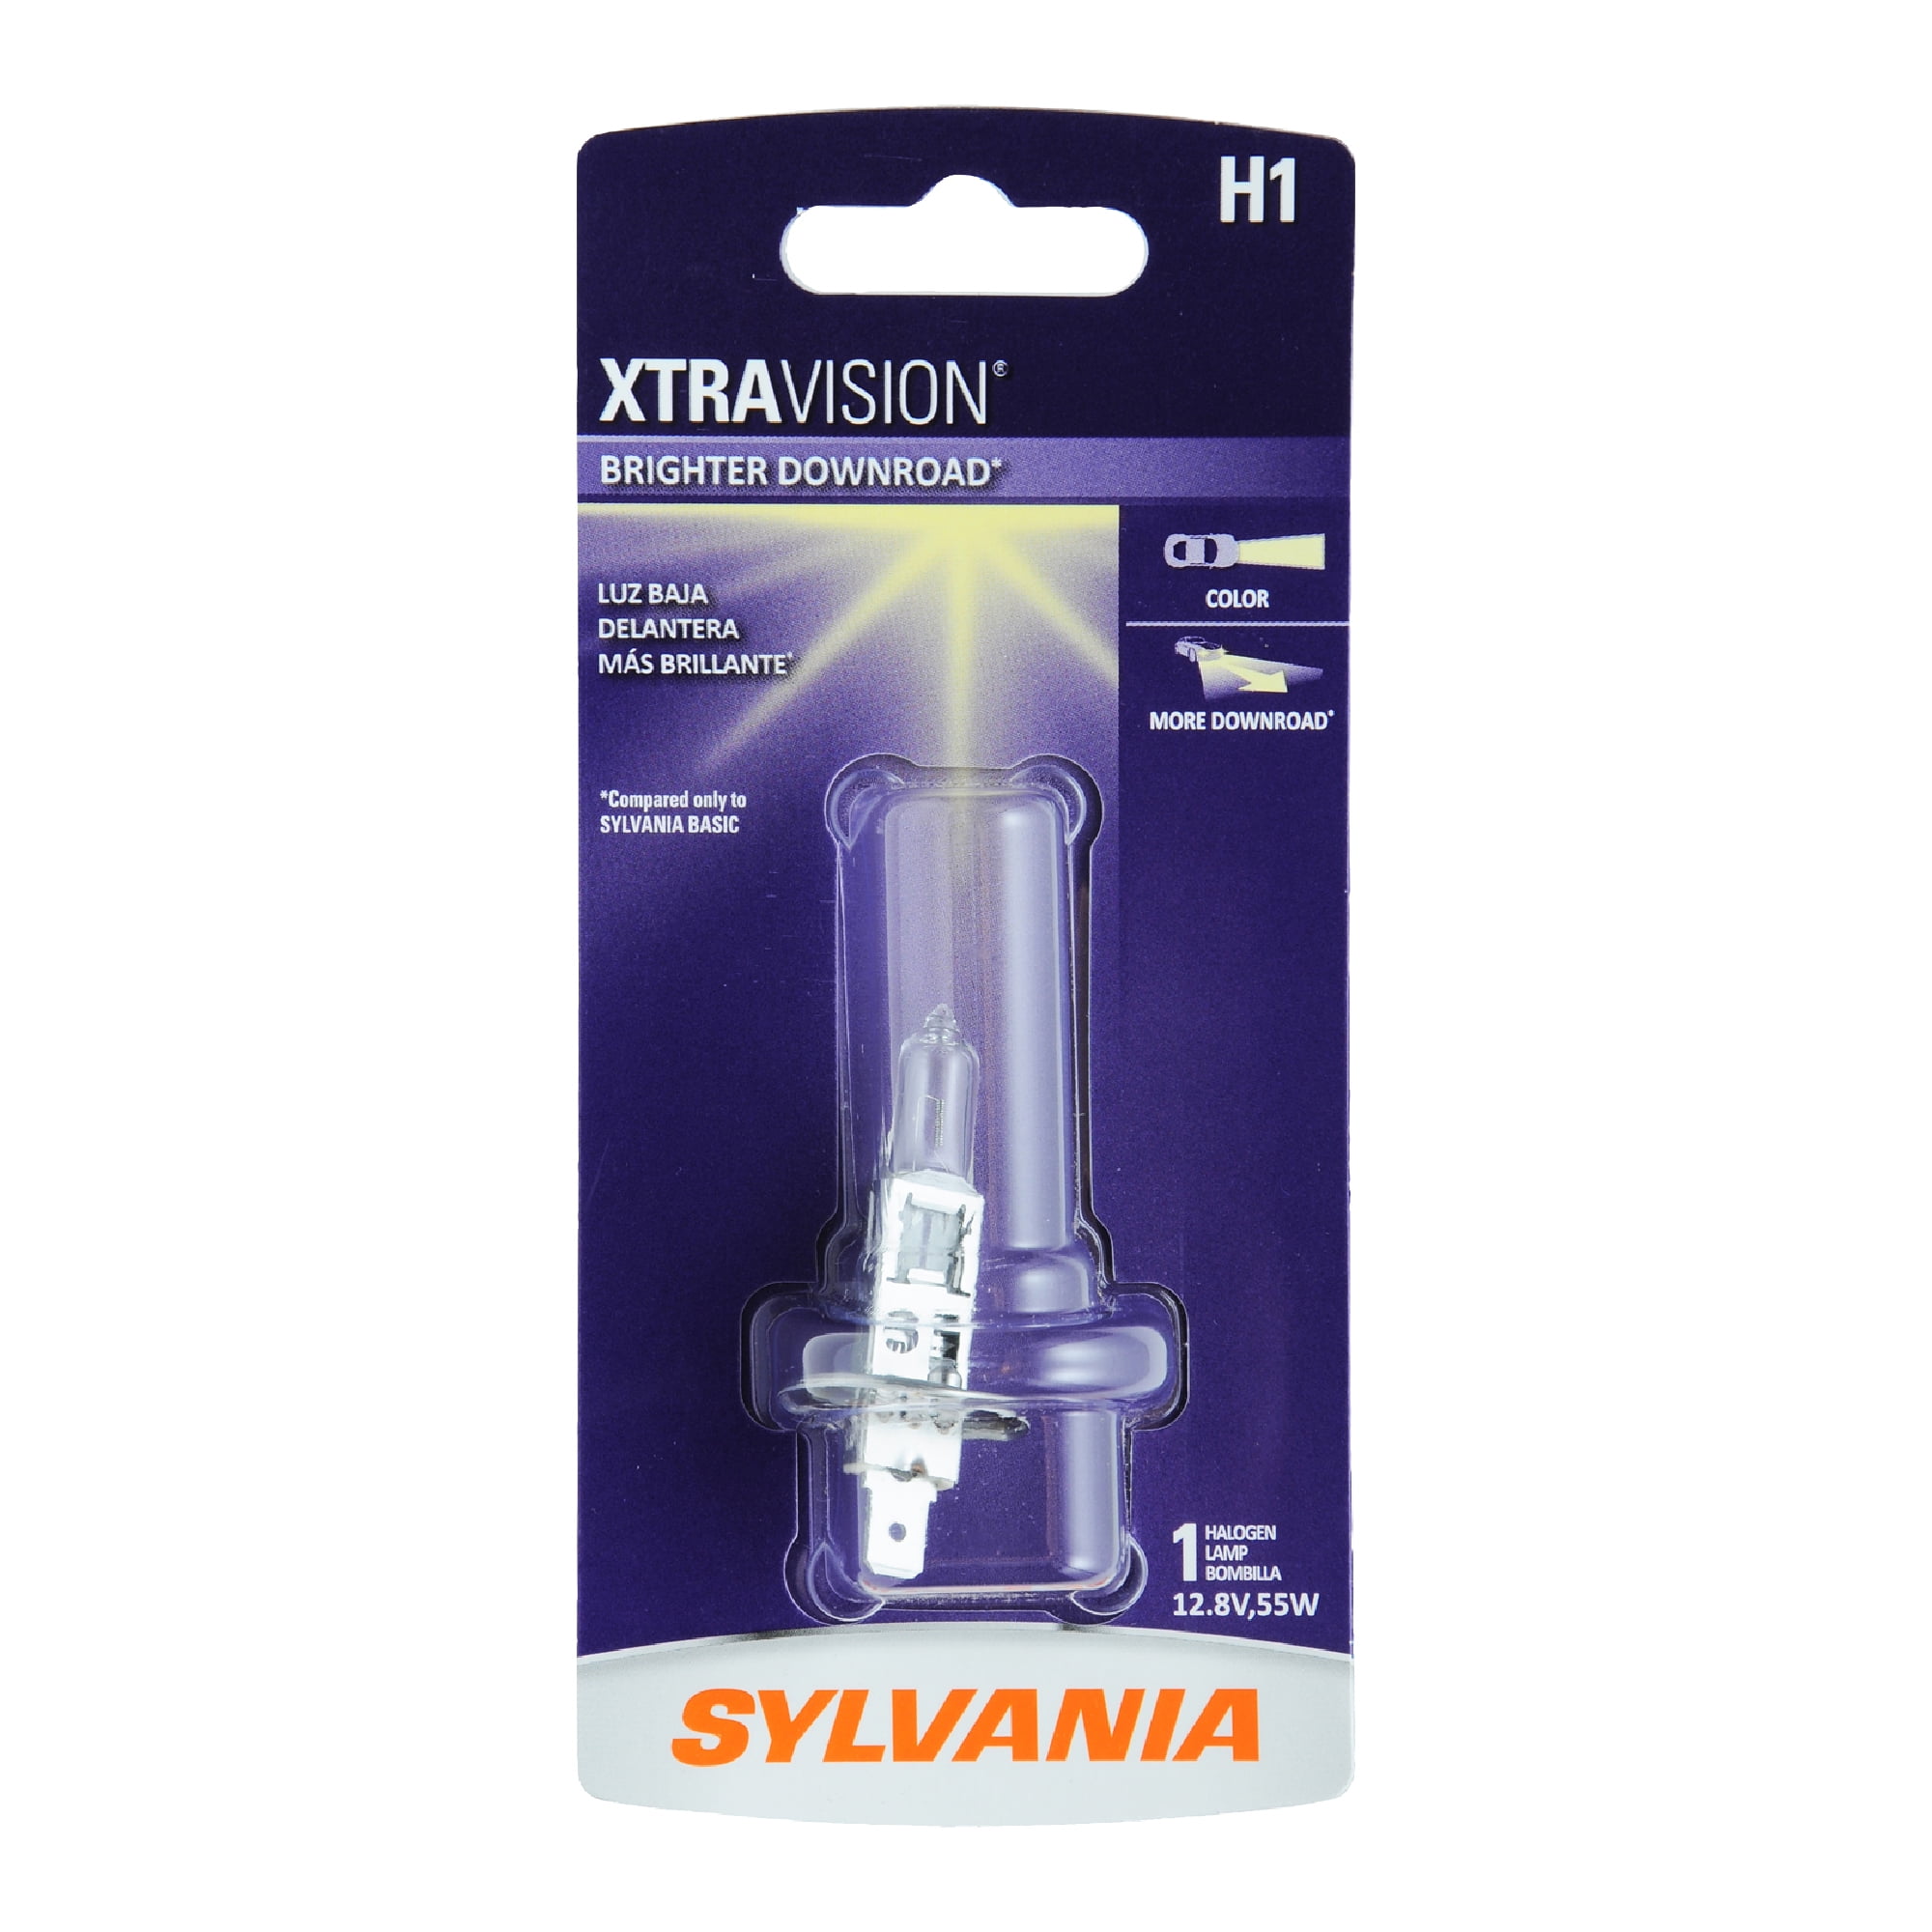 Sylvania H1 XtraVision Halogen Headlight Bulb, Pack of 1.